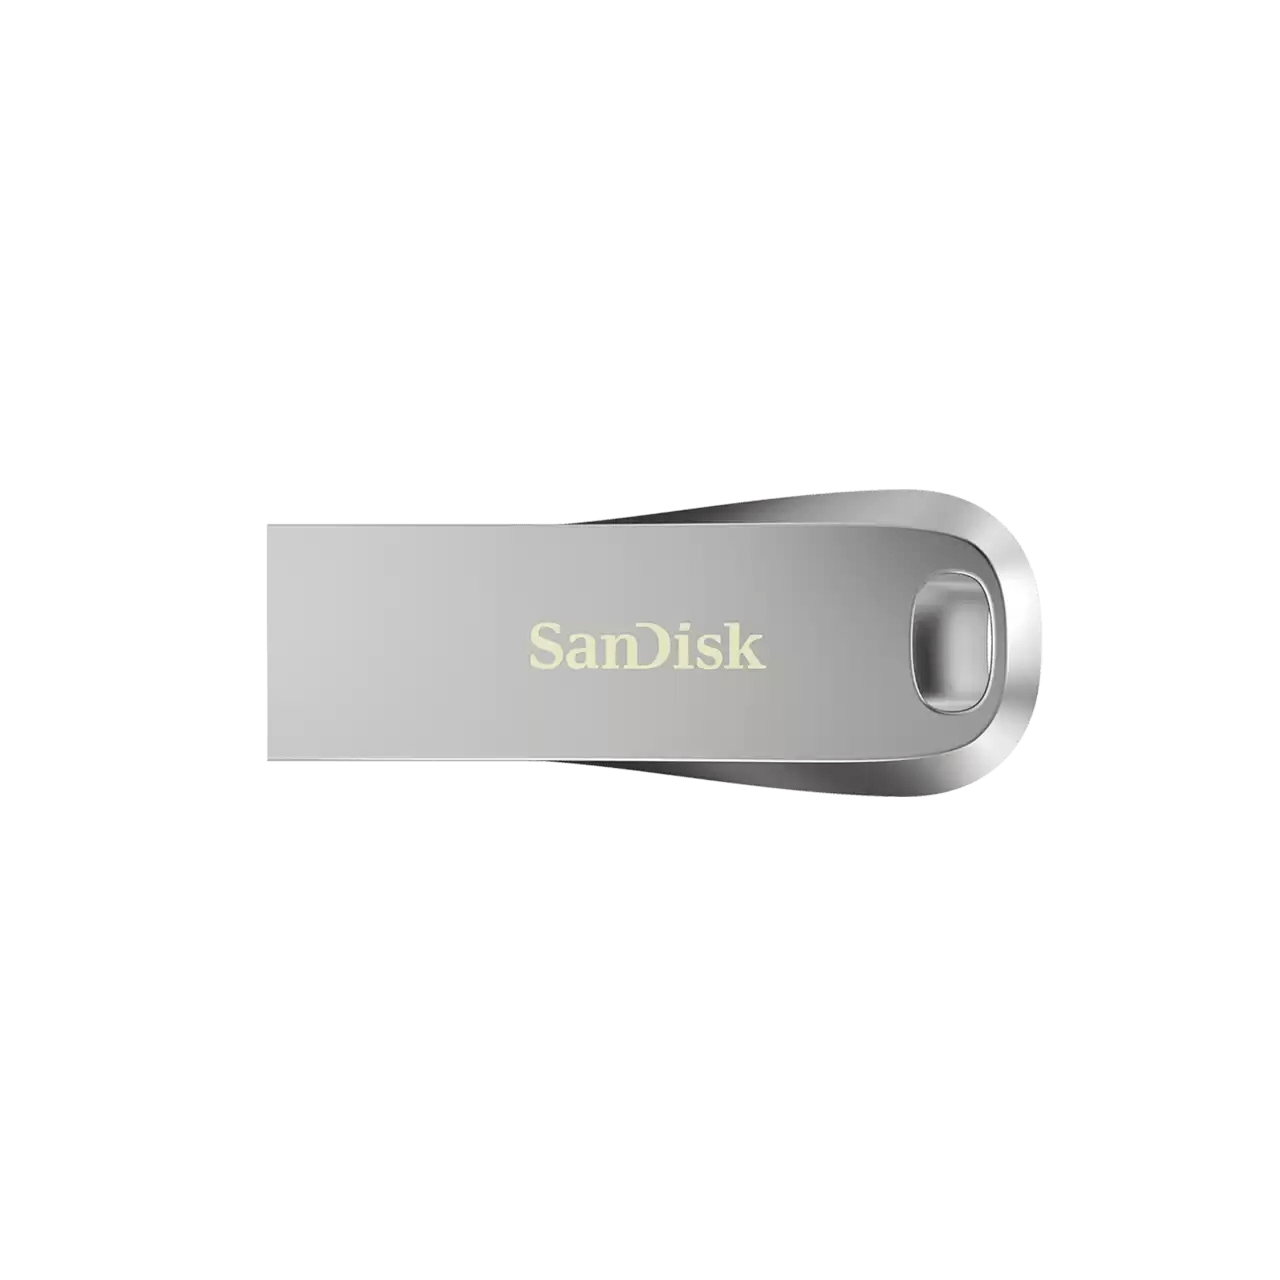 SanDisk 32GB Ultra Luxe USB 3.1 隨身碟 (SDCZ74 - 032G - G46) - Fever Electrics 電器熱網購平台